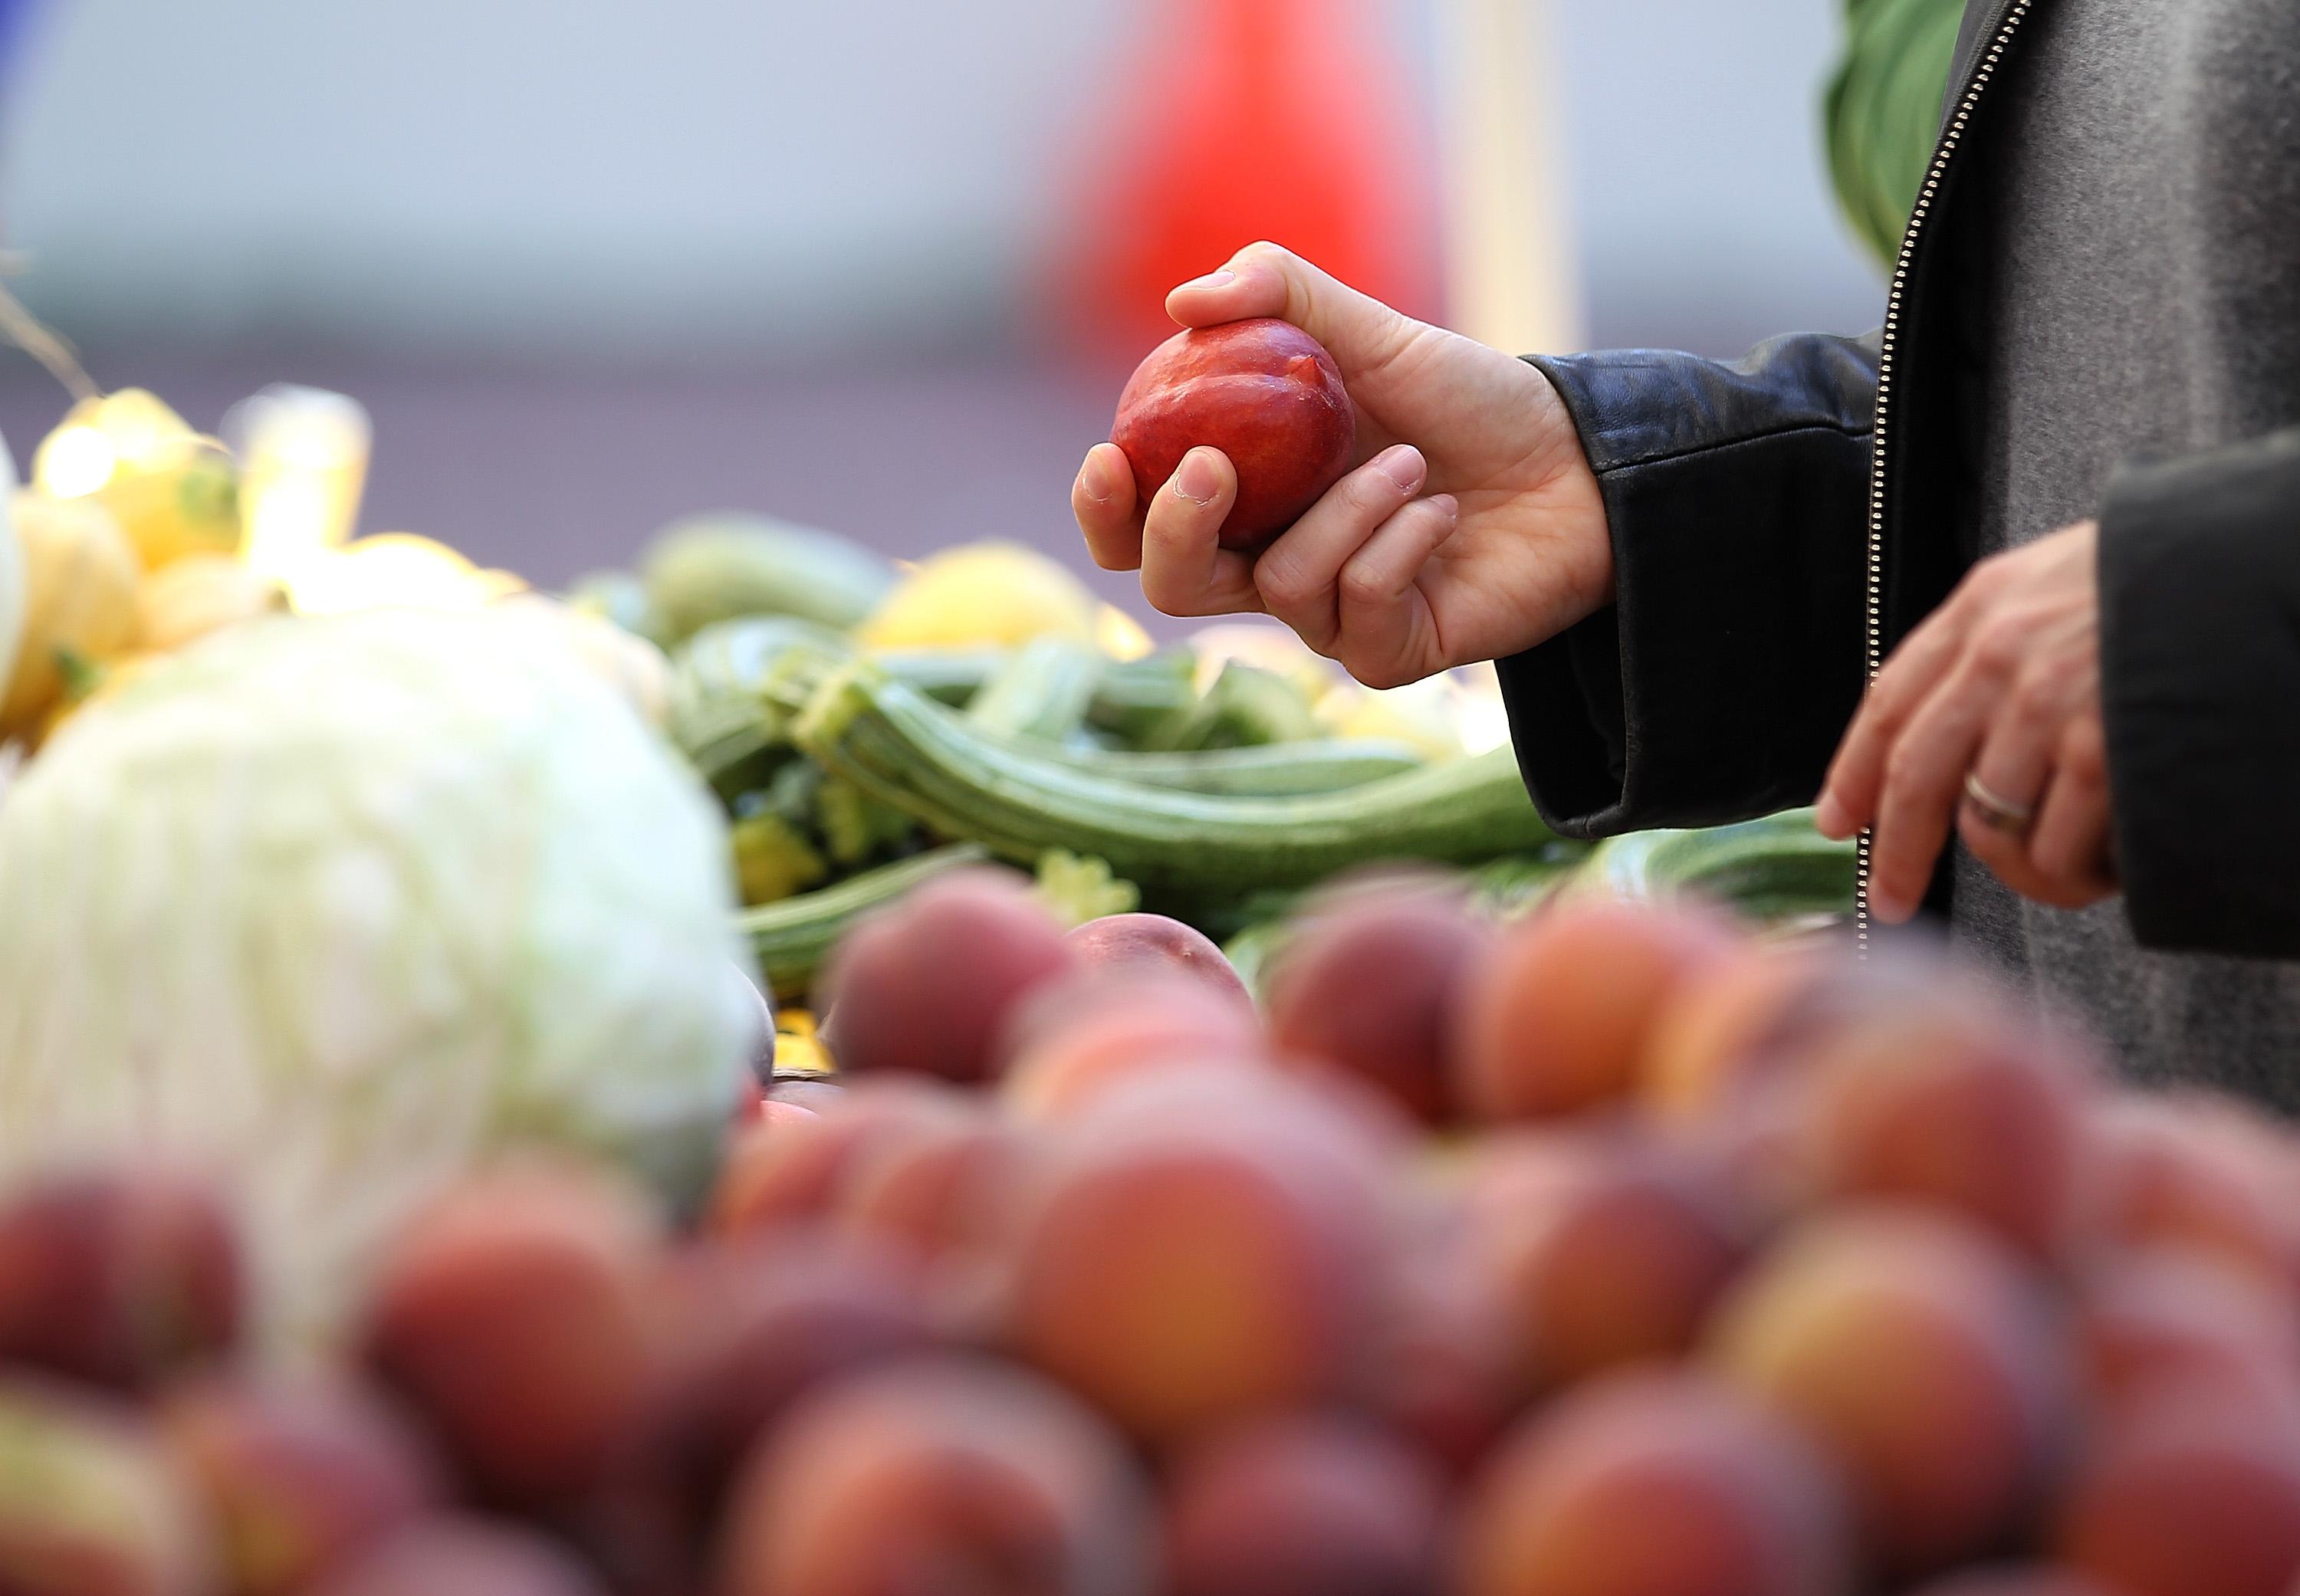 California Farm Recalls Fruit after Potential Contamination Found